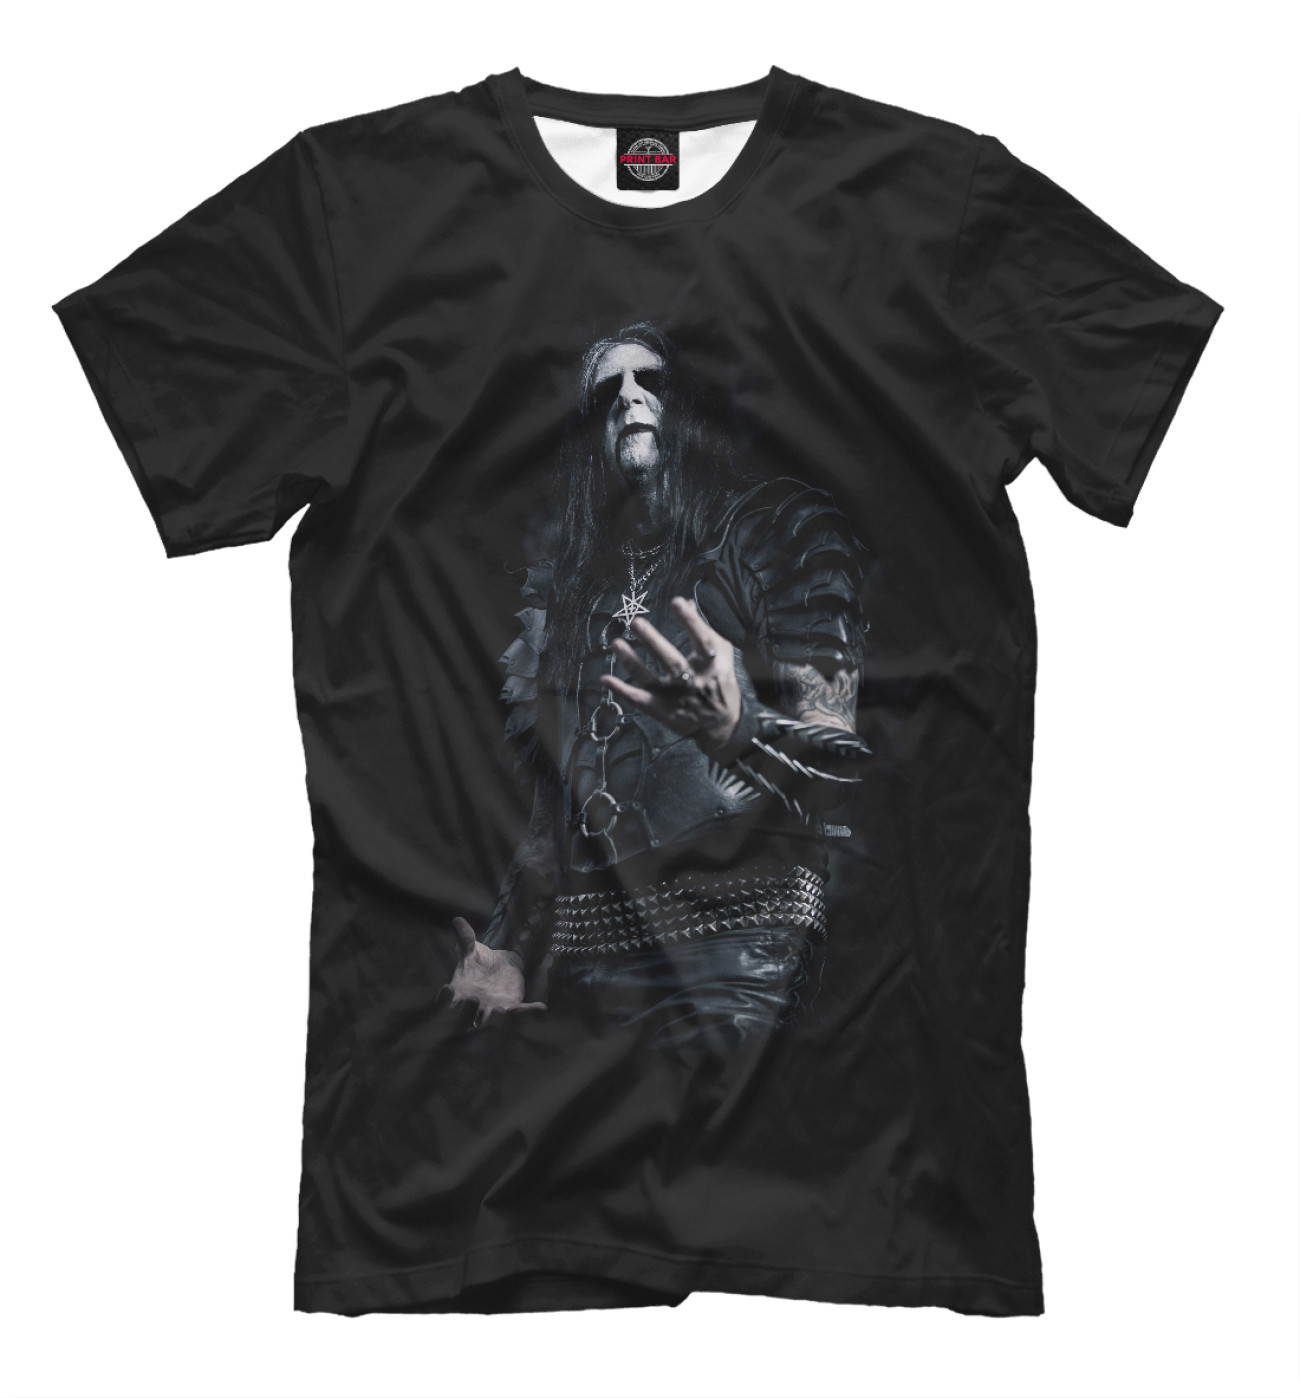 Мужская Футболка Dark Funeral, артикул: MZK-532087-fut-2